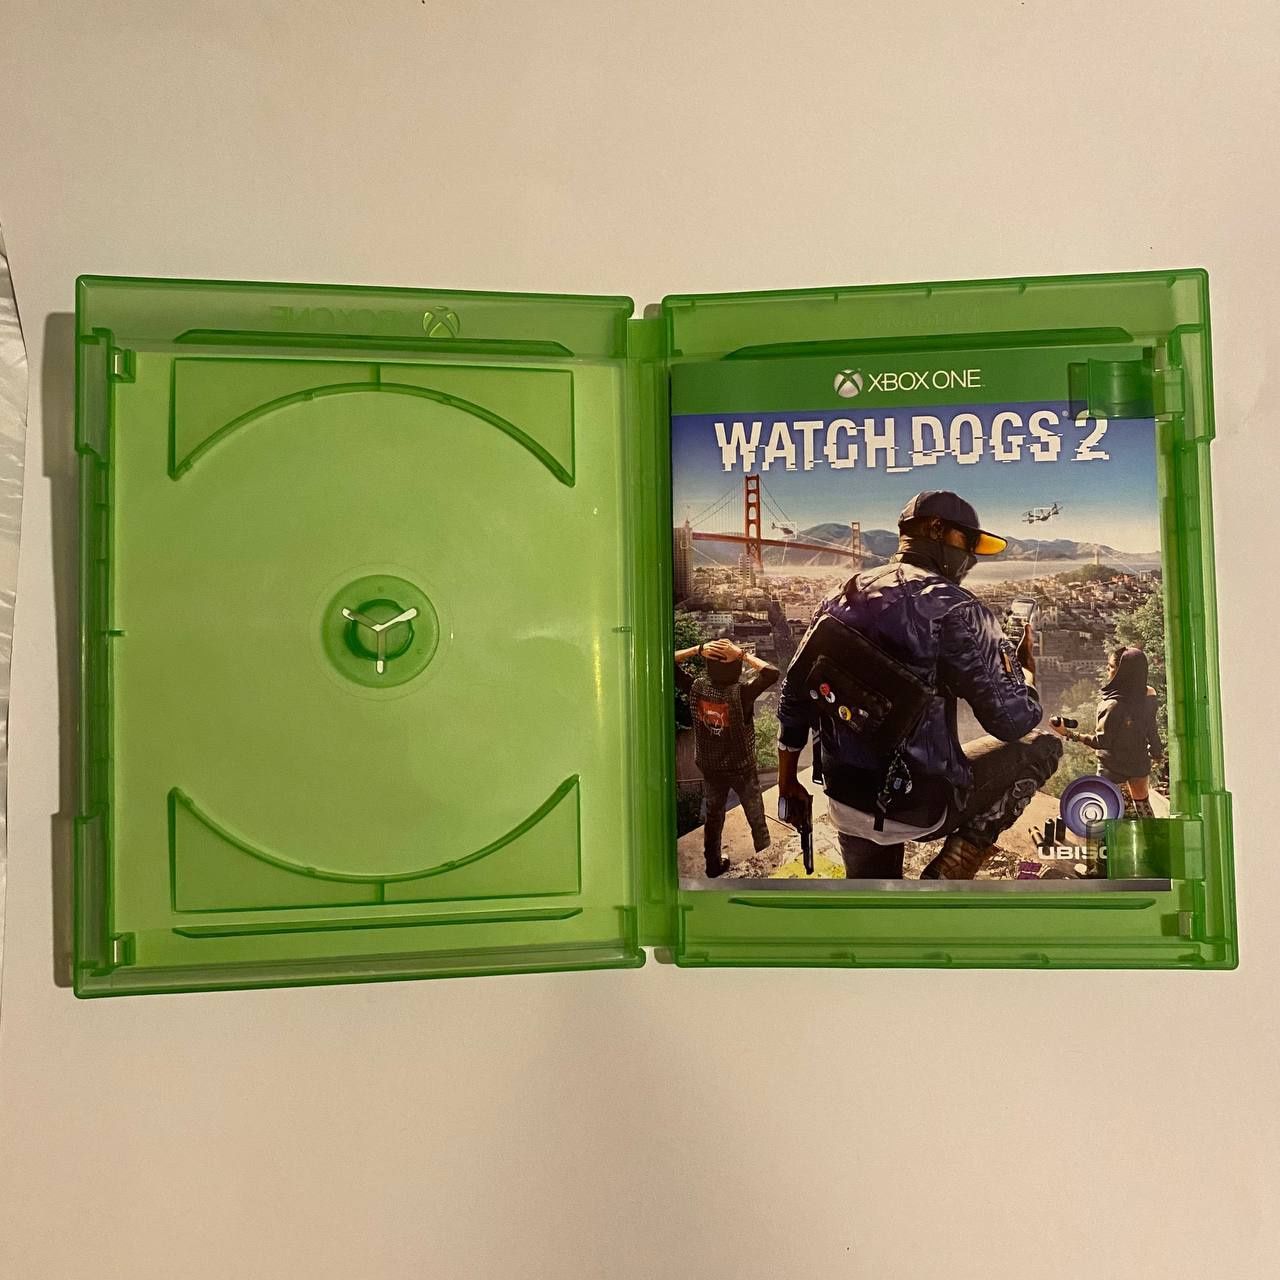 Watch Dogs 2 Xbox one